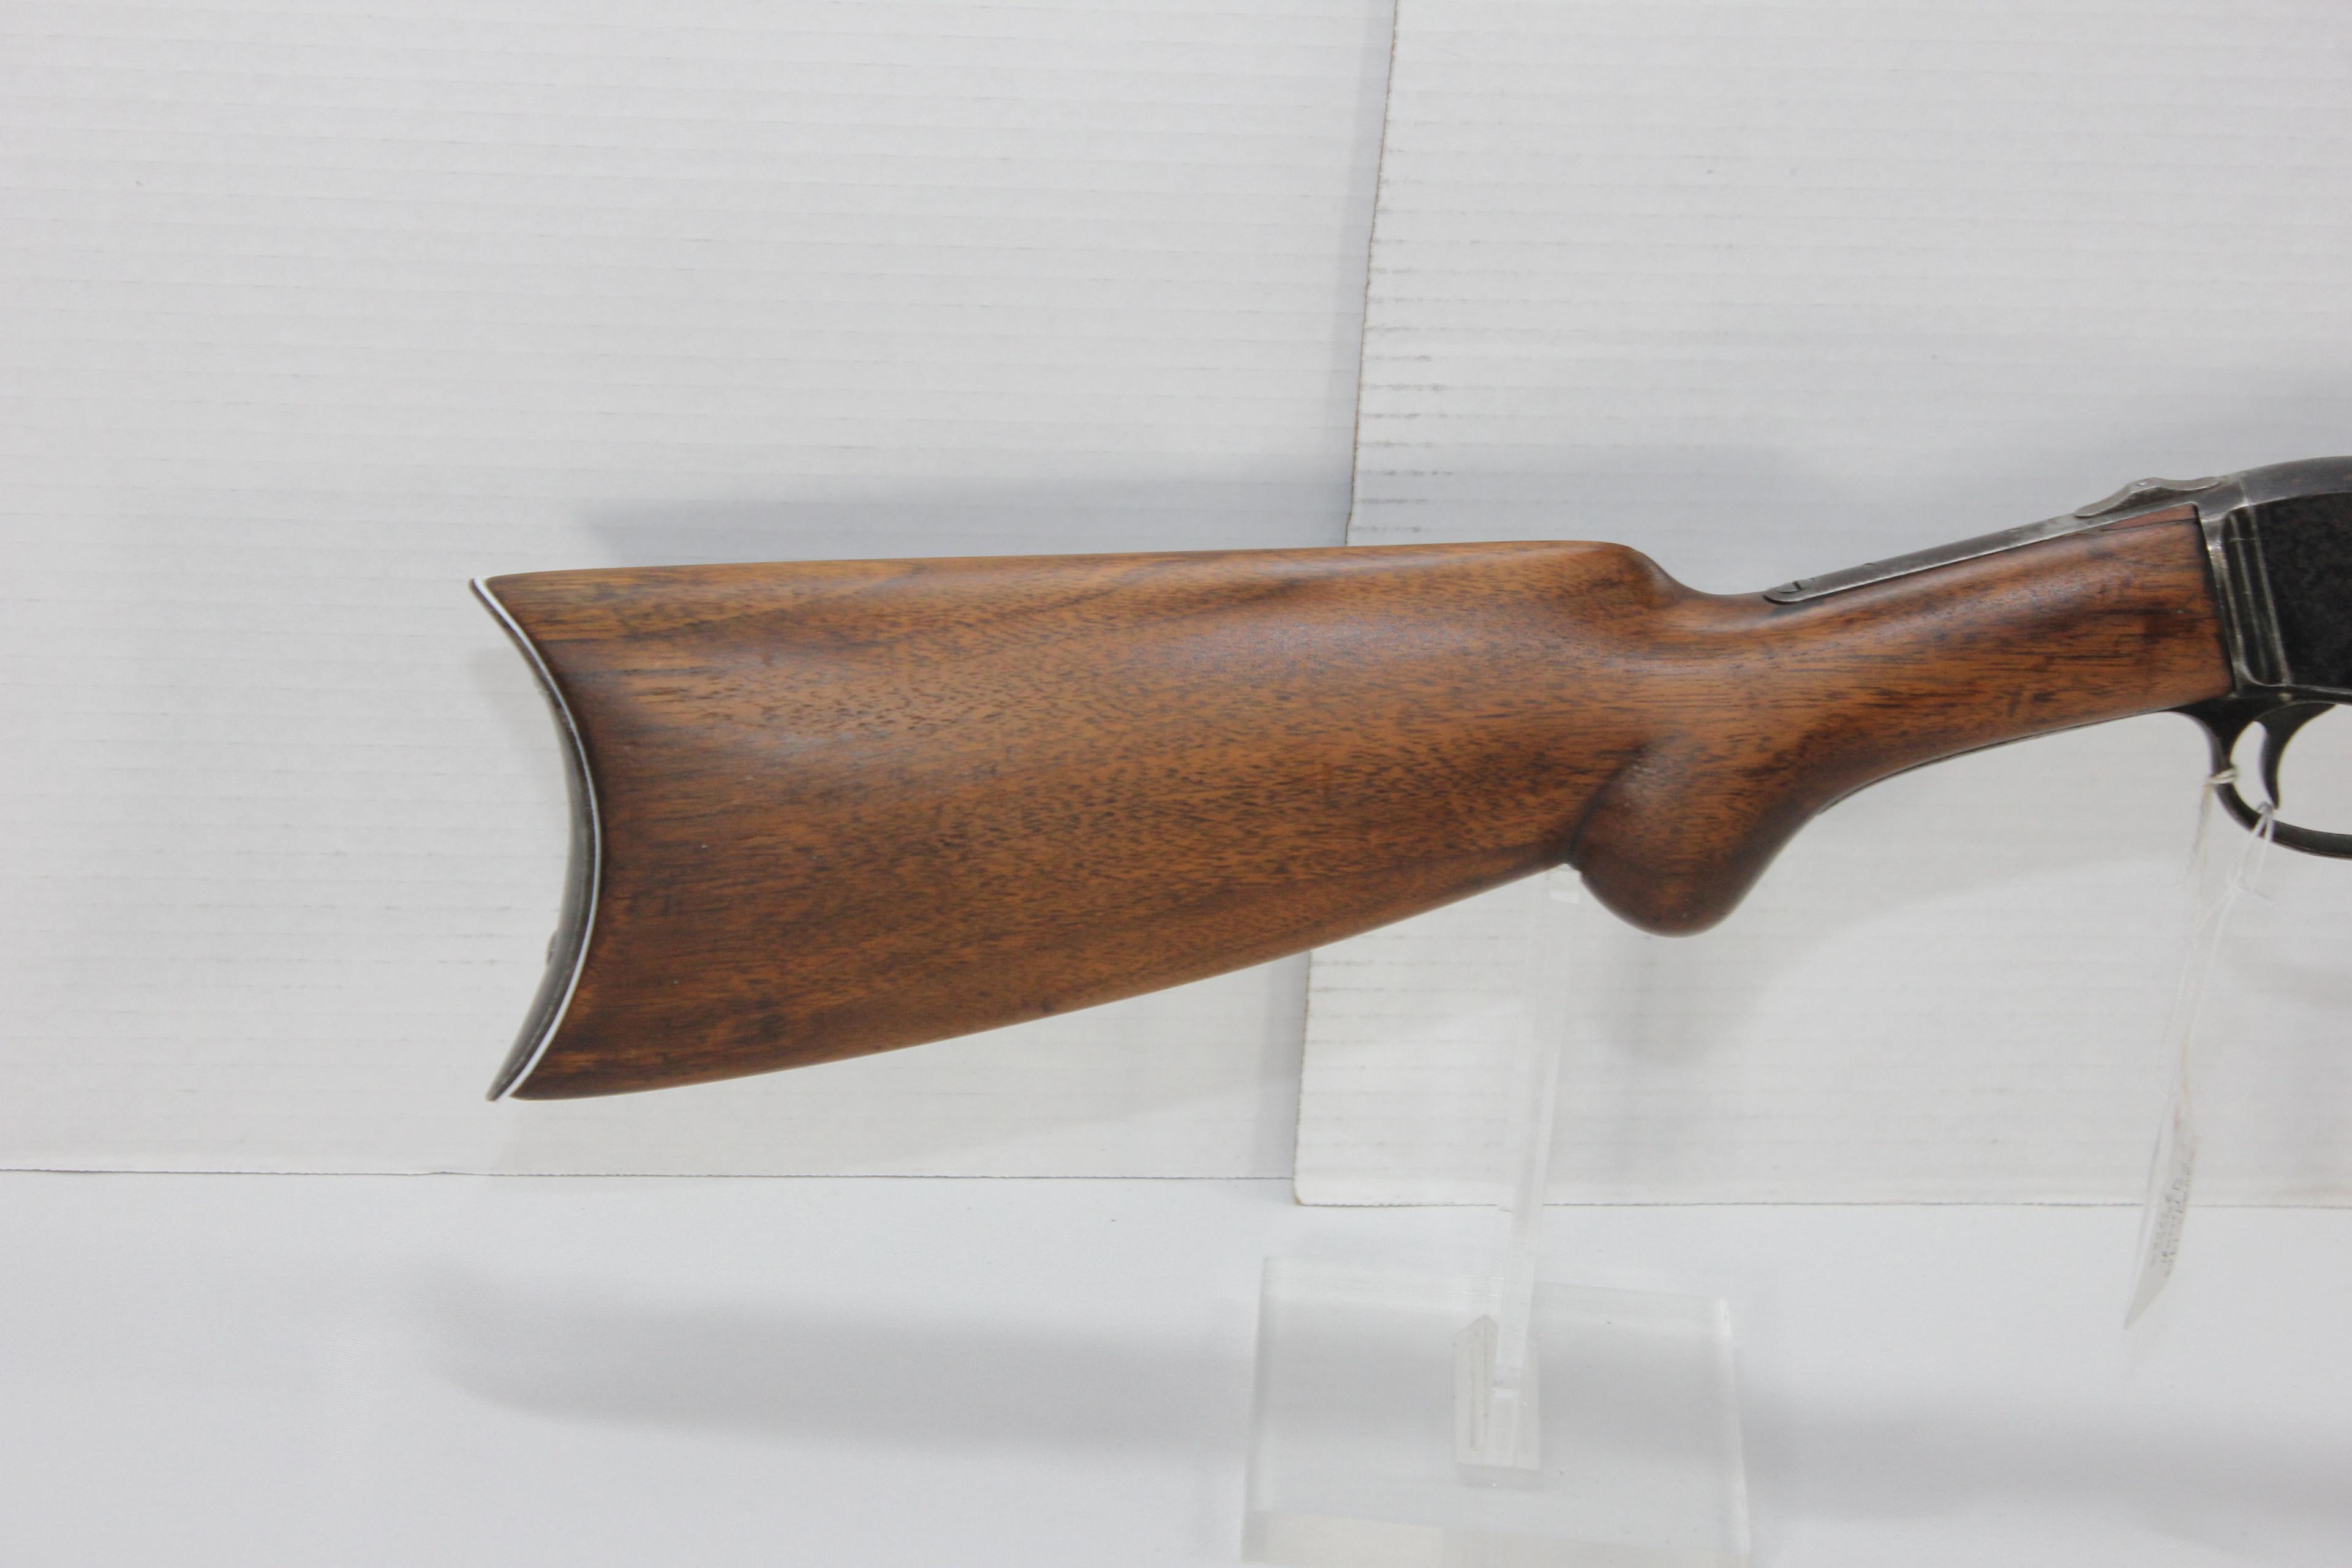 Savage Model 1903 .22 S/L/LR Pump Action Bread Down Magazine-Fed Rifle w/24" Octagon BBL; SN 98429